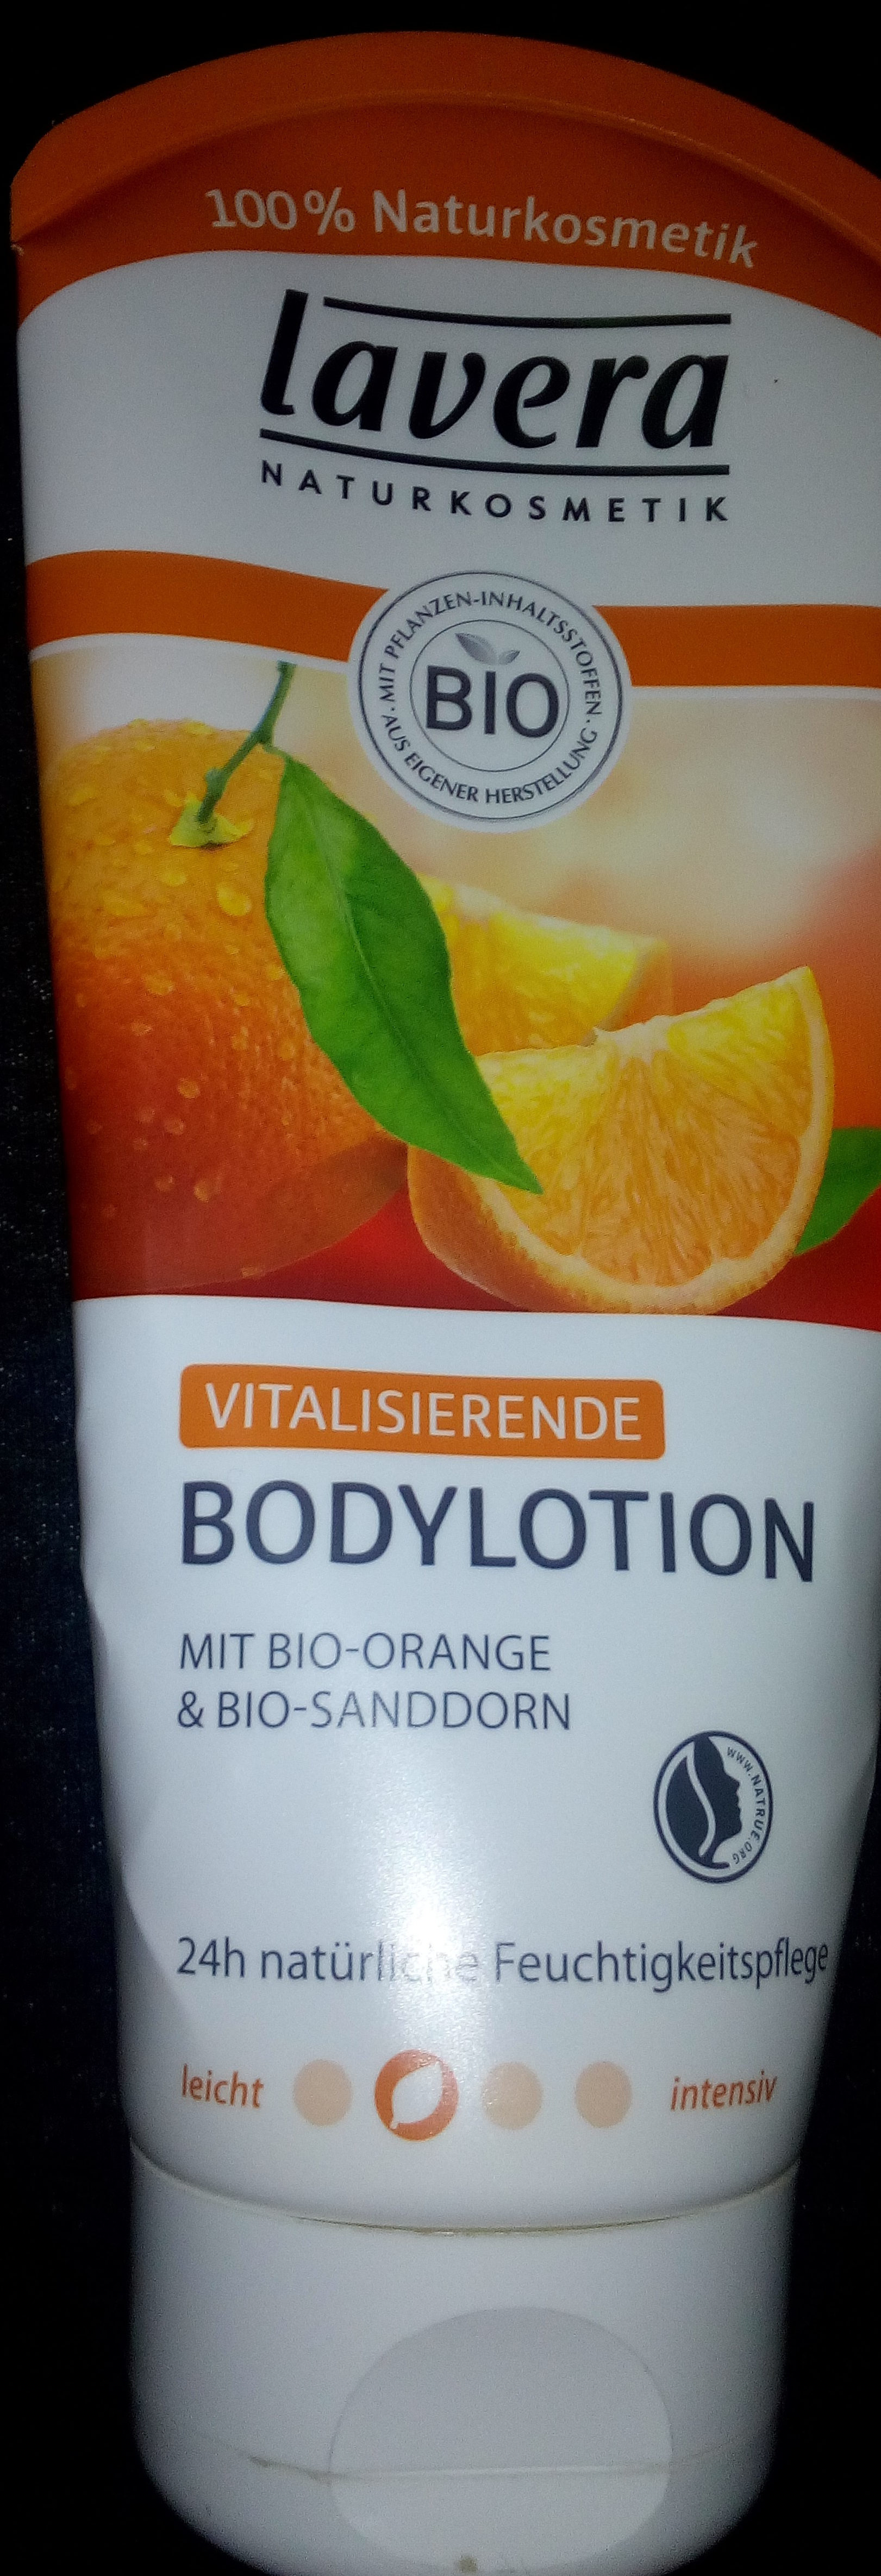 Vitalisierende Bodylotion mit Bio-Orange & Bio-Sanddorn - Product - de